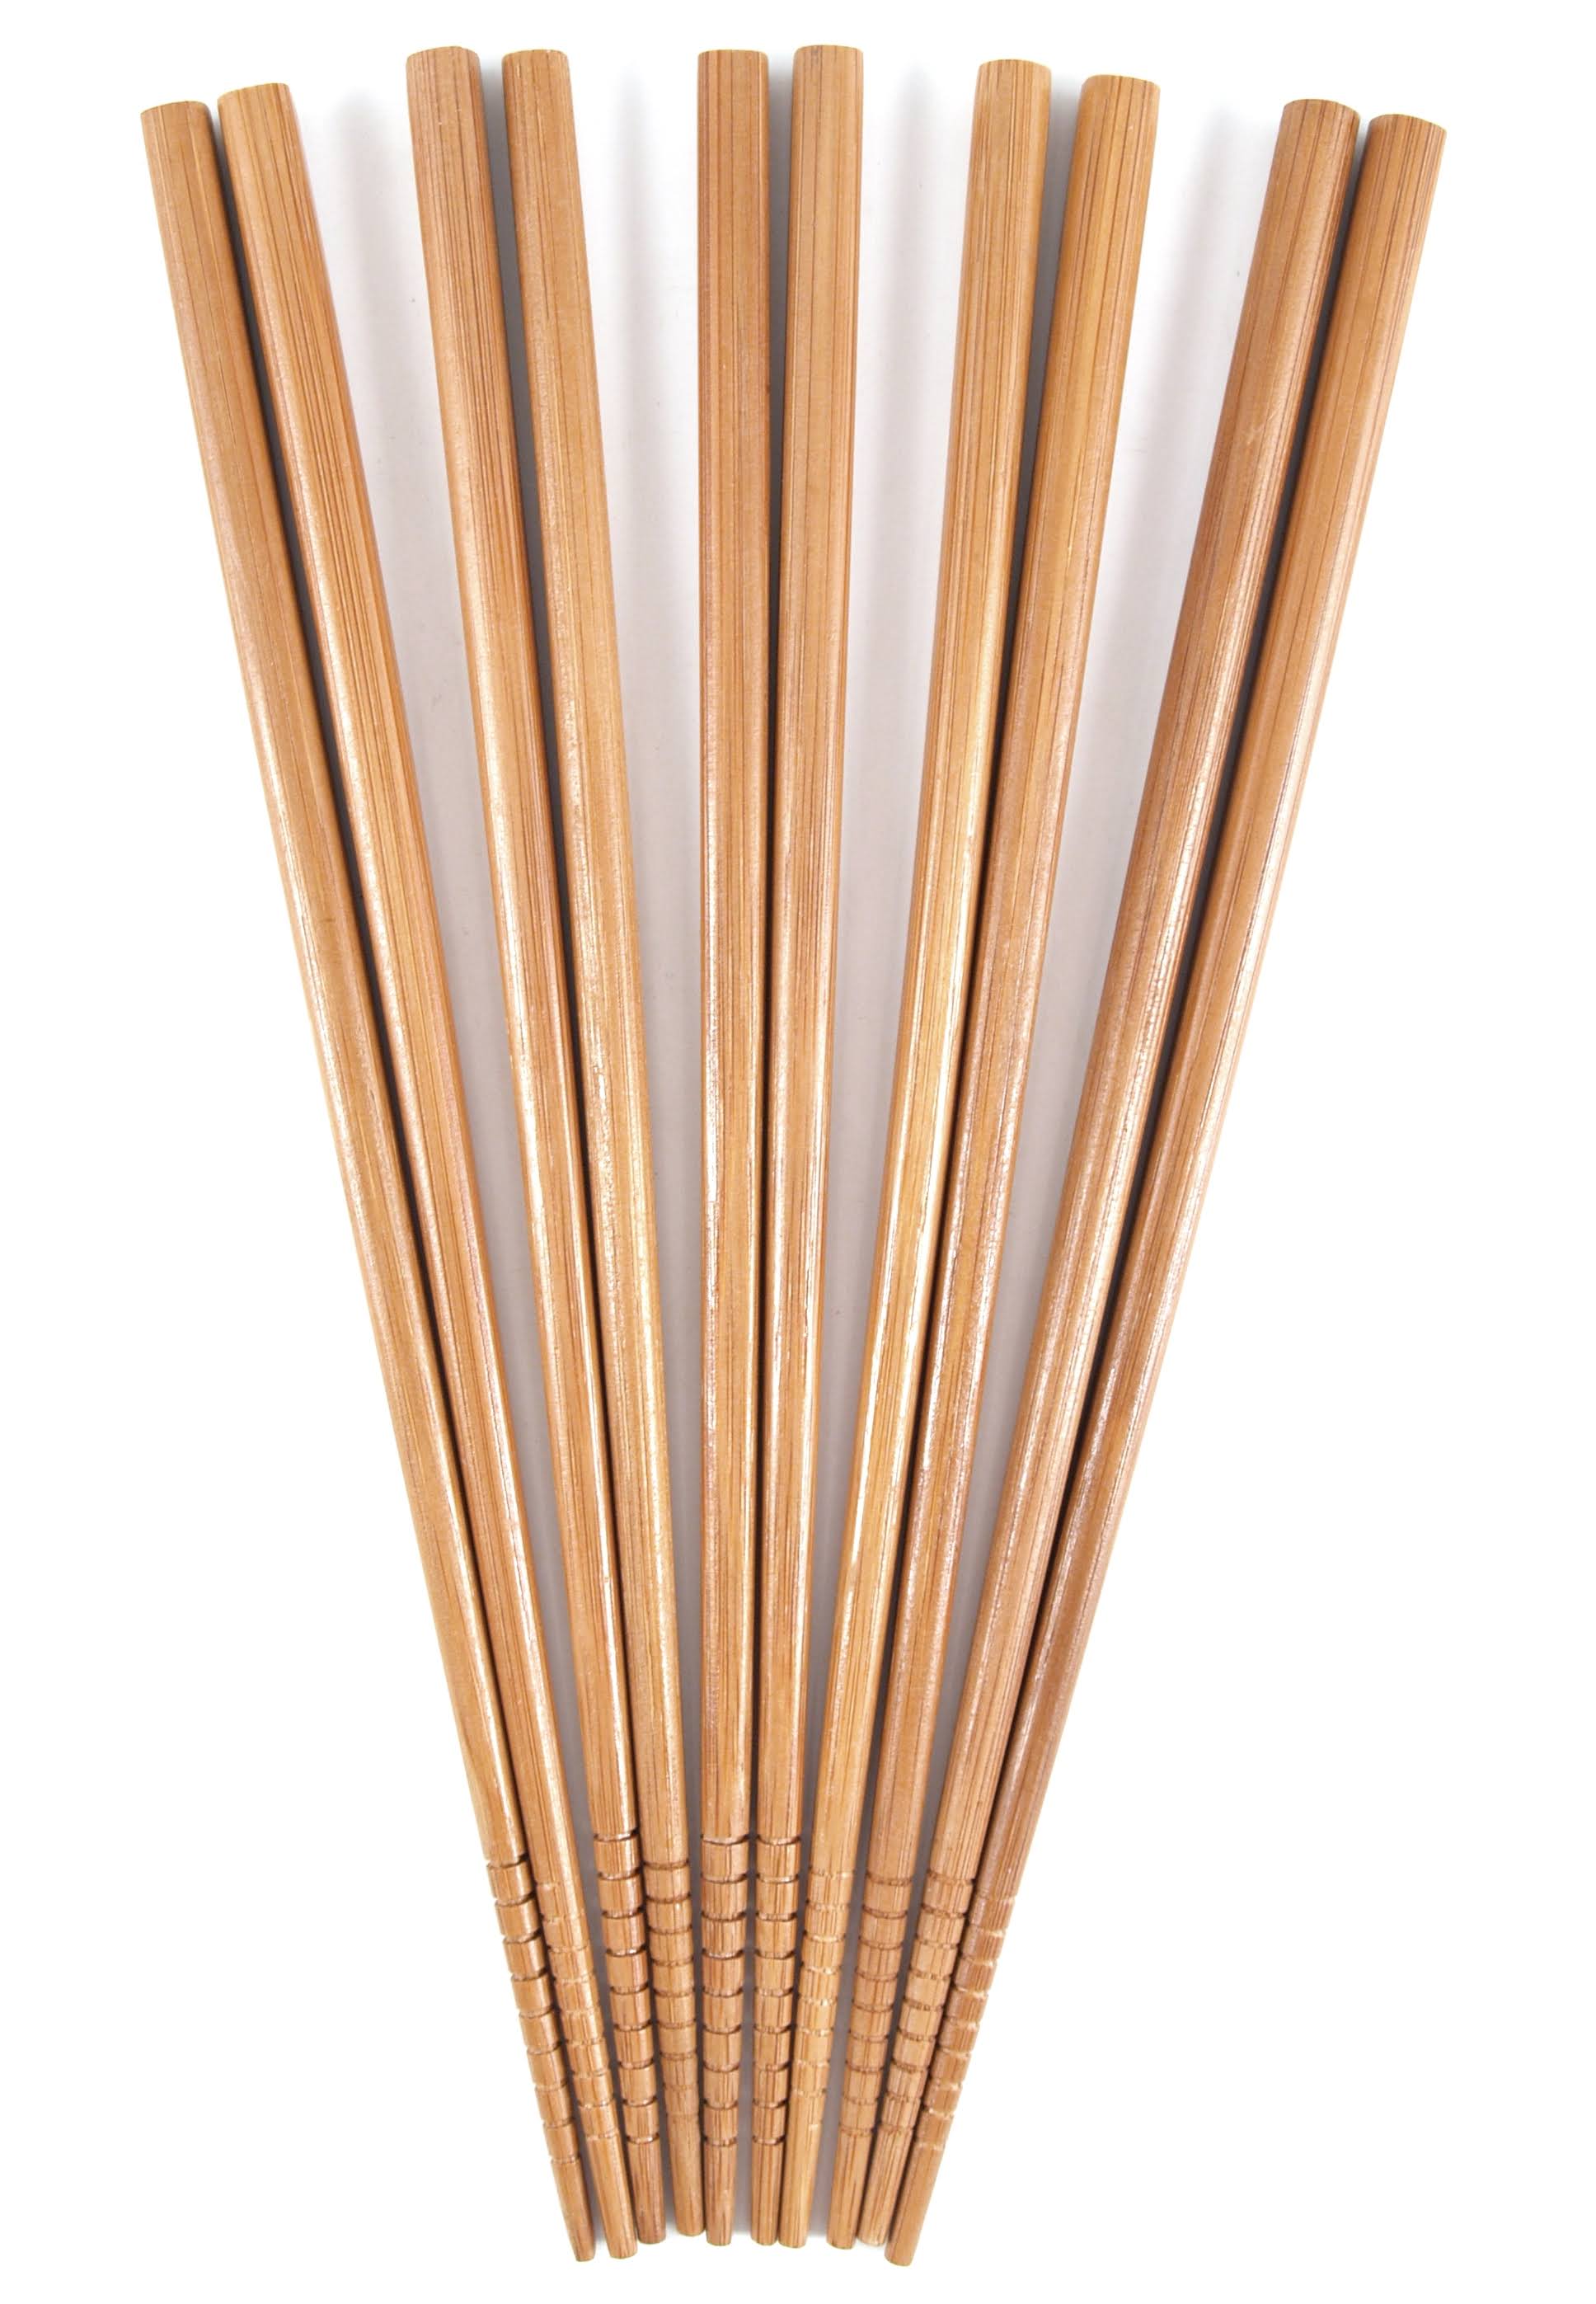 BigKitchen Notched Bamboo Wood Chopsticks Asian 5 Set